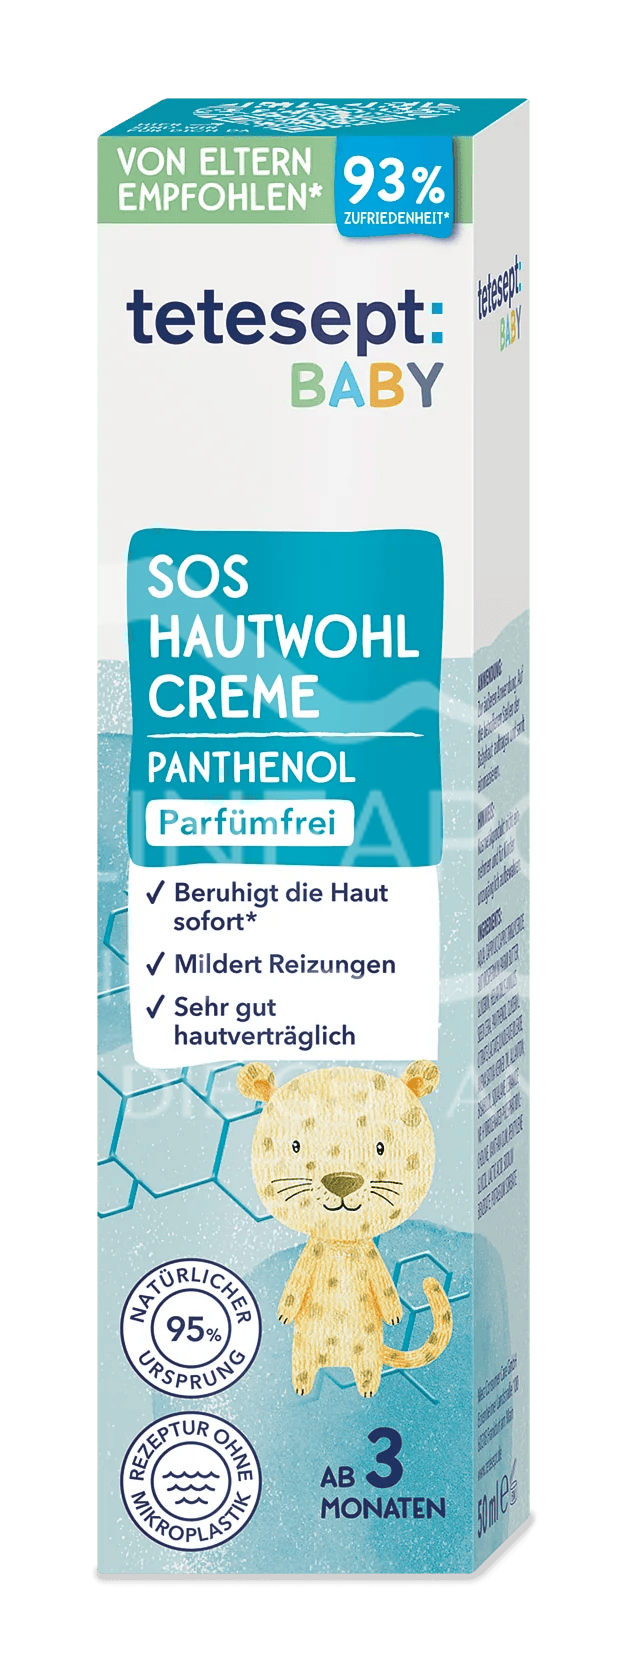 tetesept BABY SOS Hautwohl Creme mit Panthenol & parfümfrei